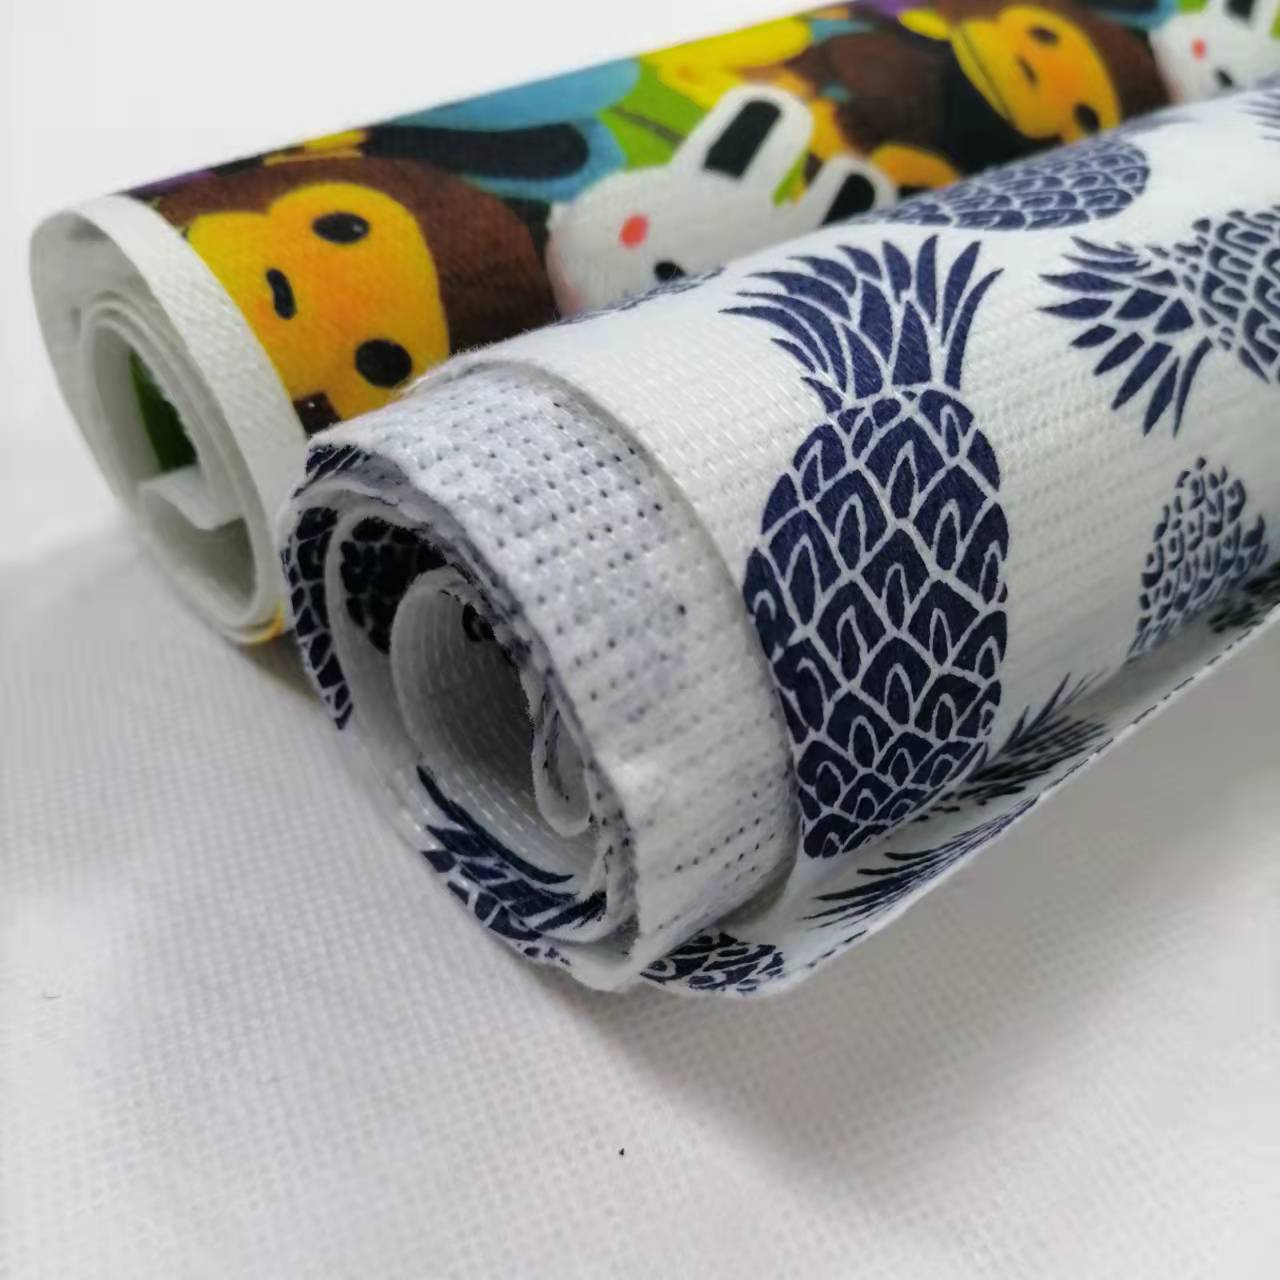 High-quality 100%PP textile Stitchbondnon-woven fabric for shop non woven bag